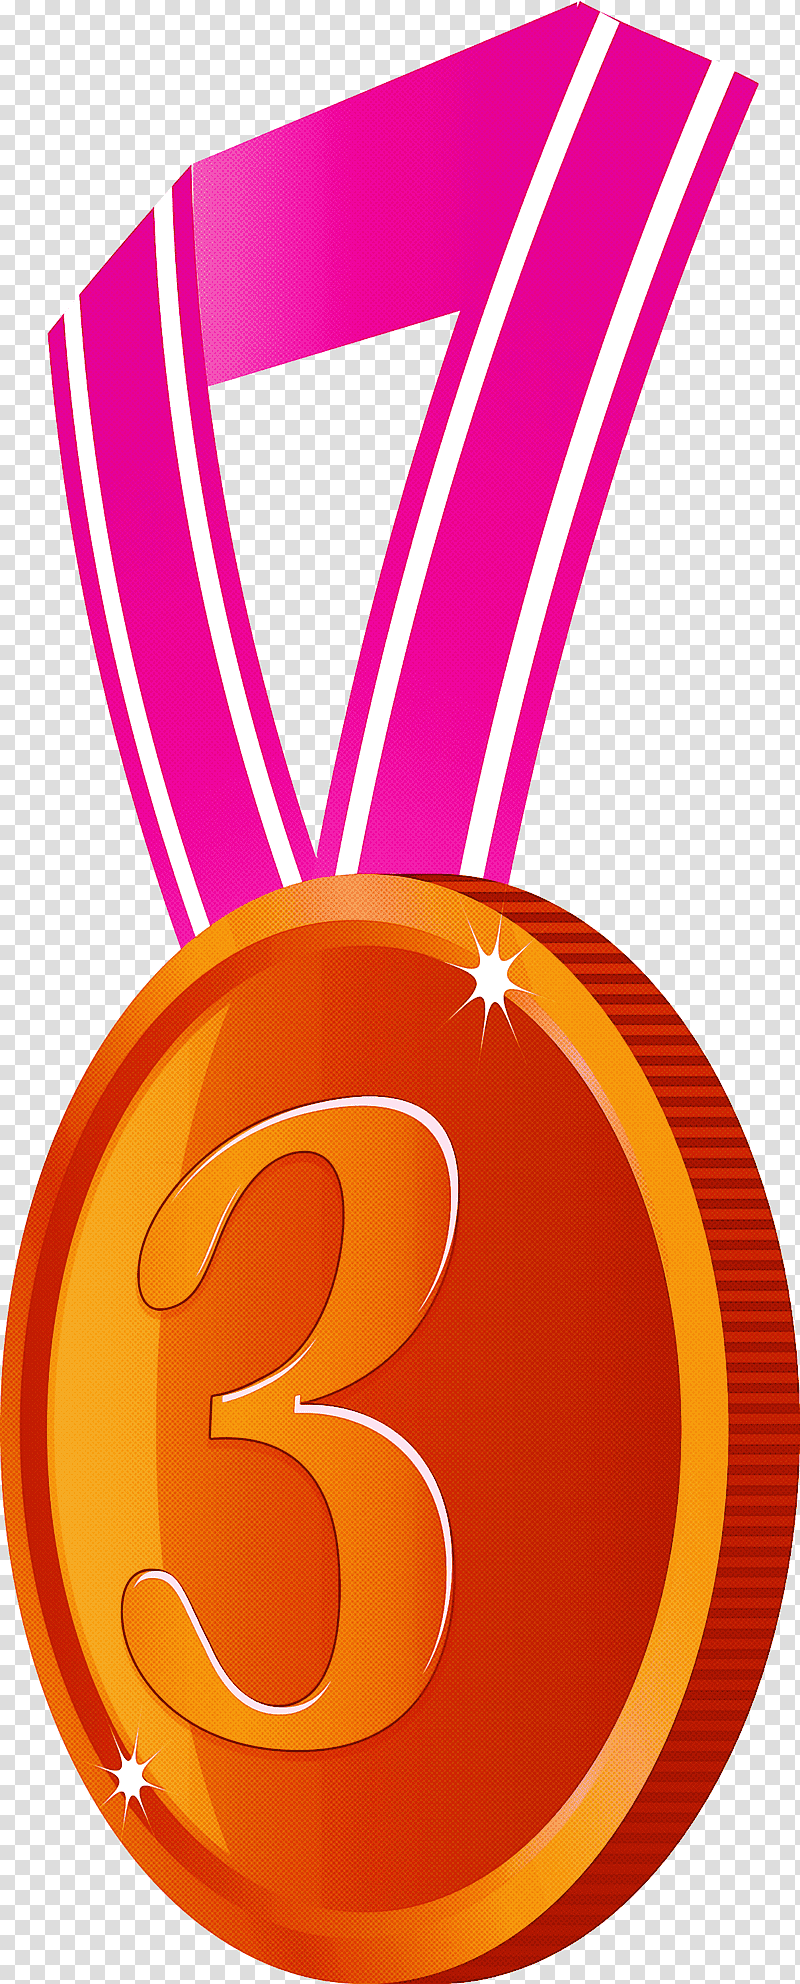 Brozen Badge Award Badge, Cartoon, Medal, Text, Animation, Logo, Gold Medal transparent background PNG clipart